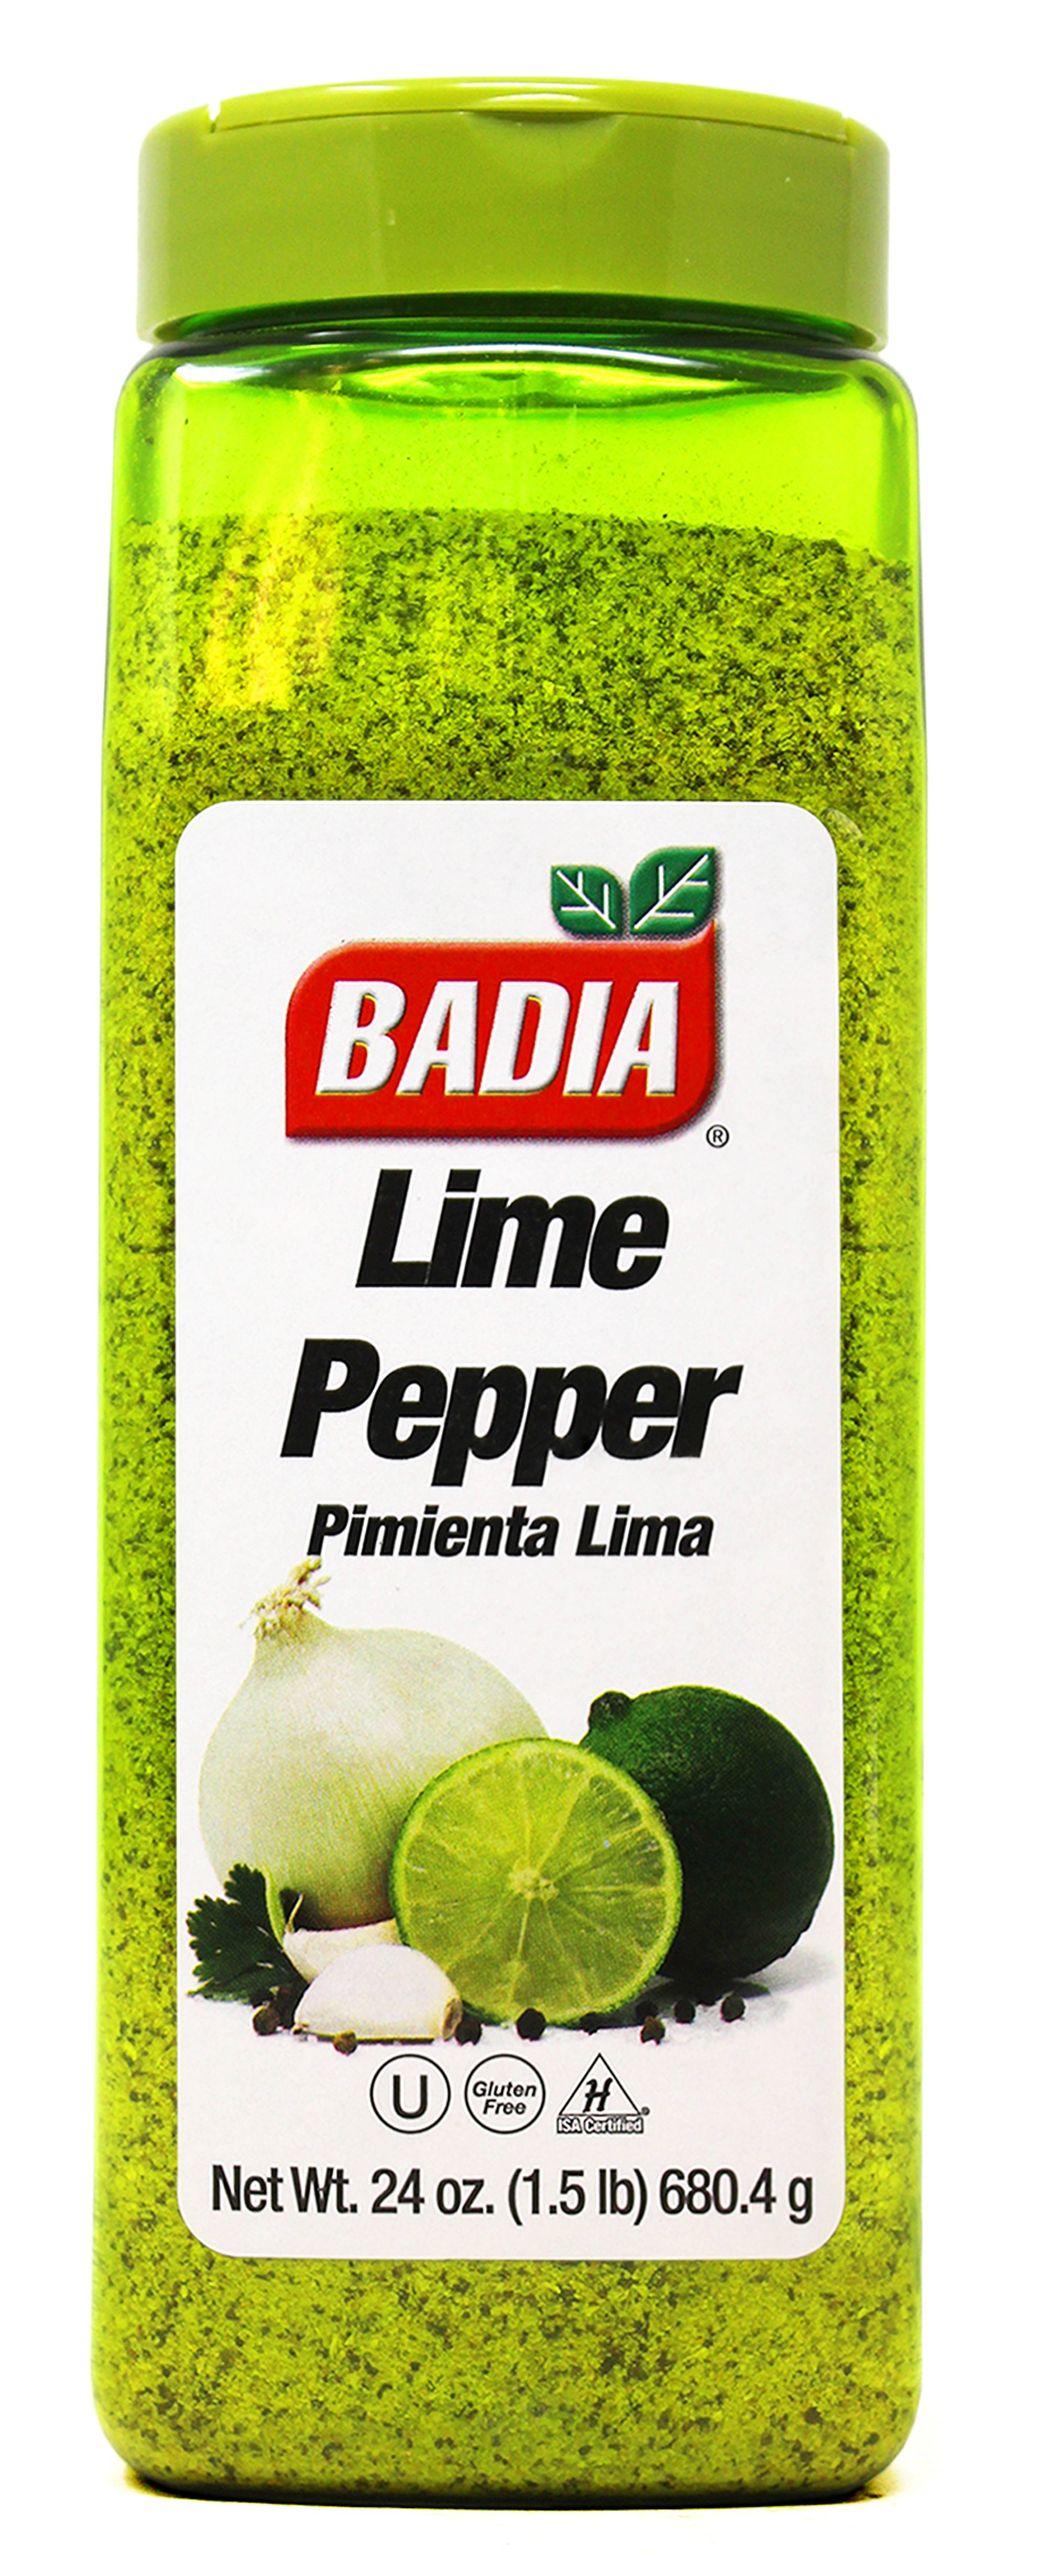 Badia Cilantro Lime Pepper Salt 8 oz